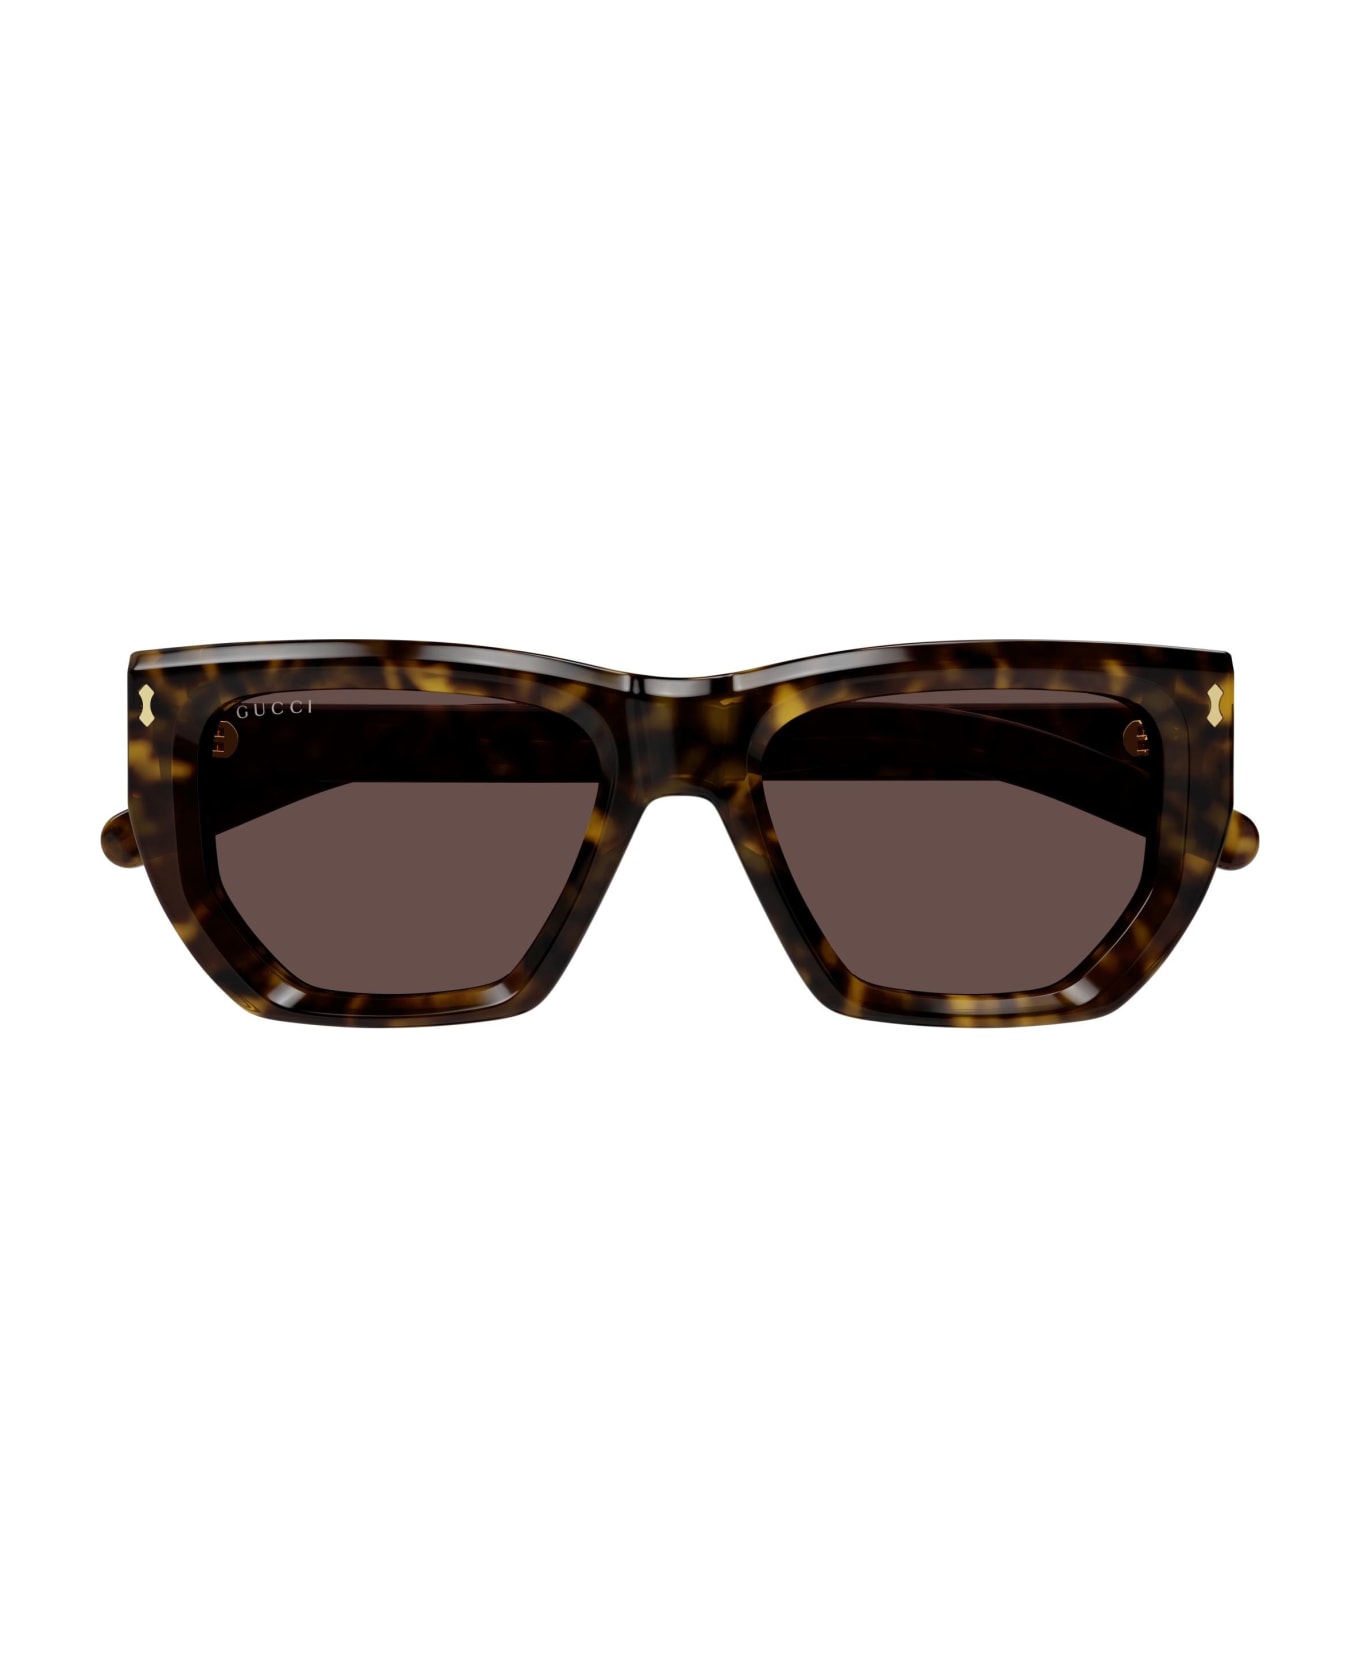 Gucci Eyewear Sunglasses - Havana/Marrone